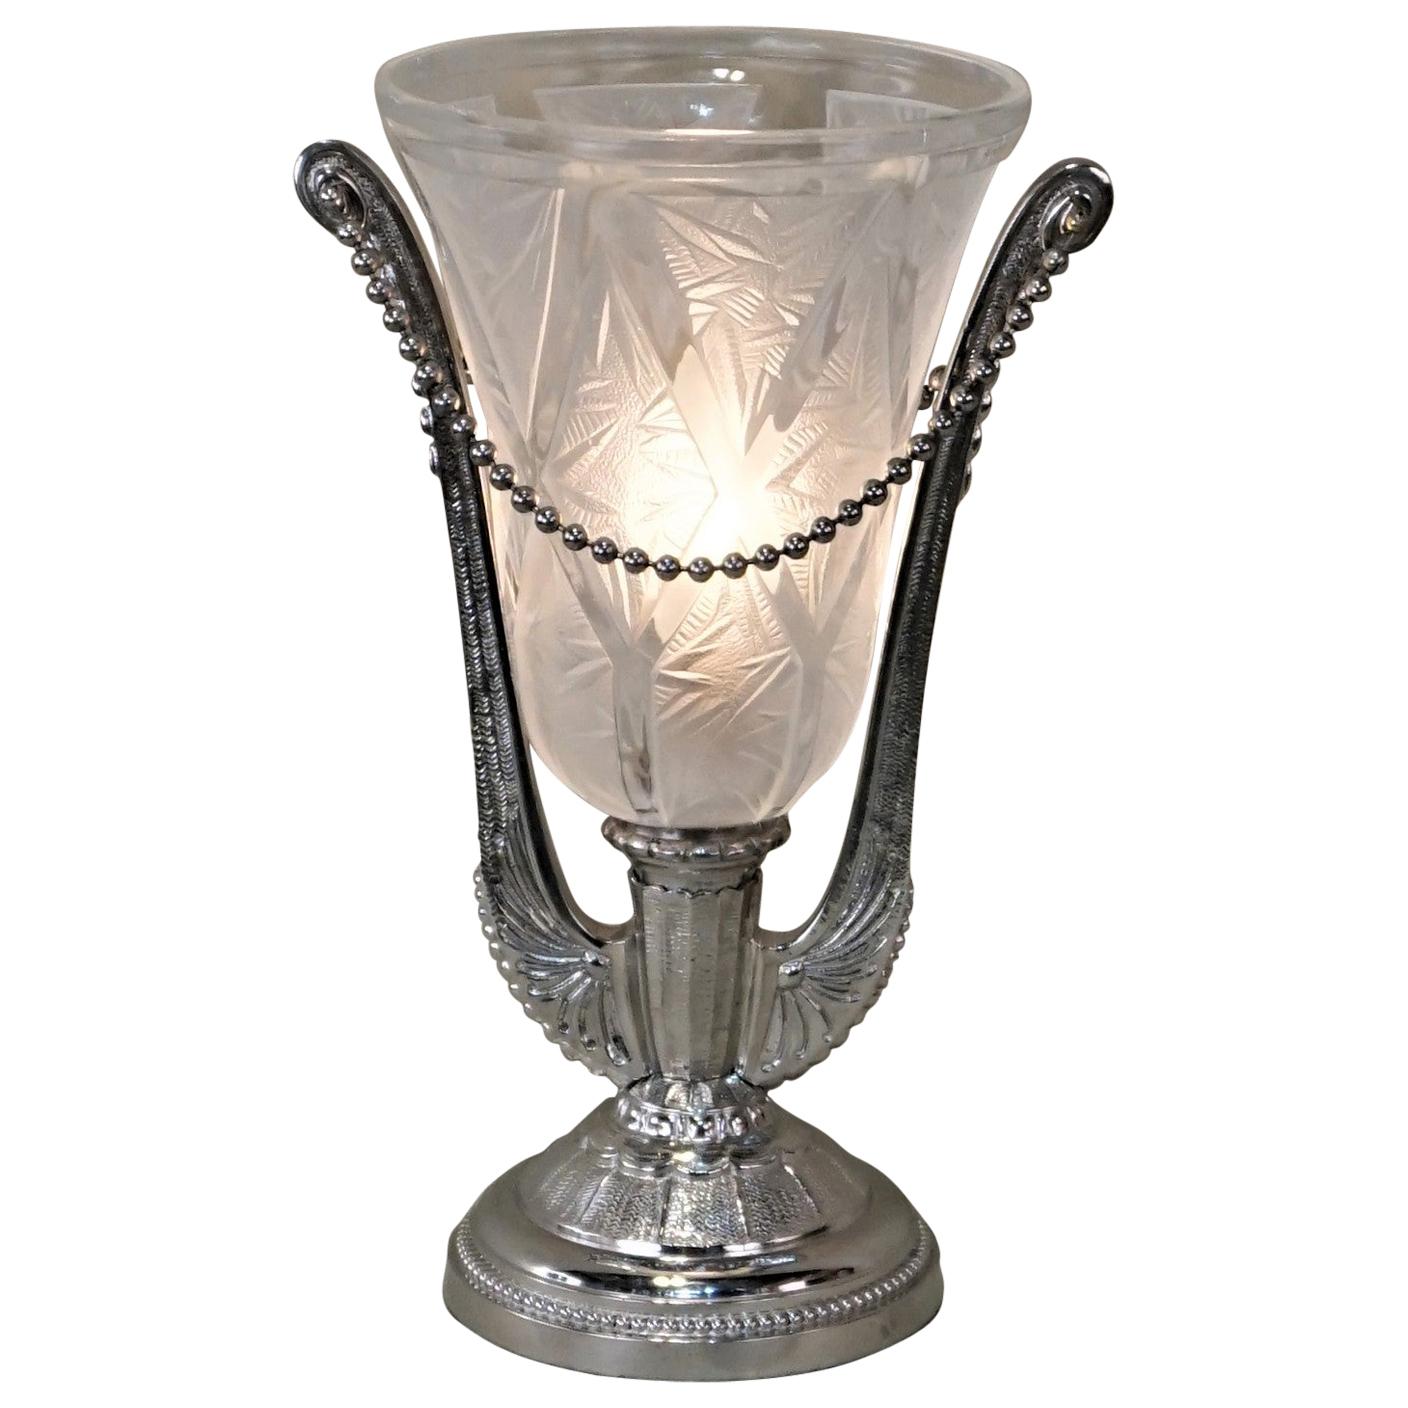 French Art Deco Table Lamp by Verrerie des Hanots